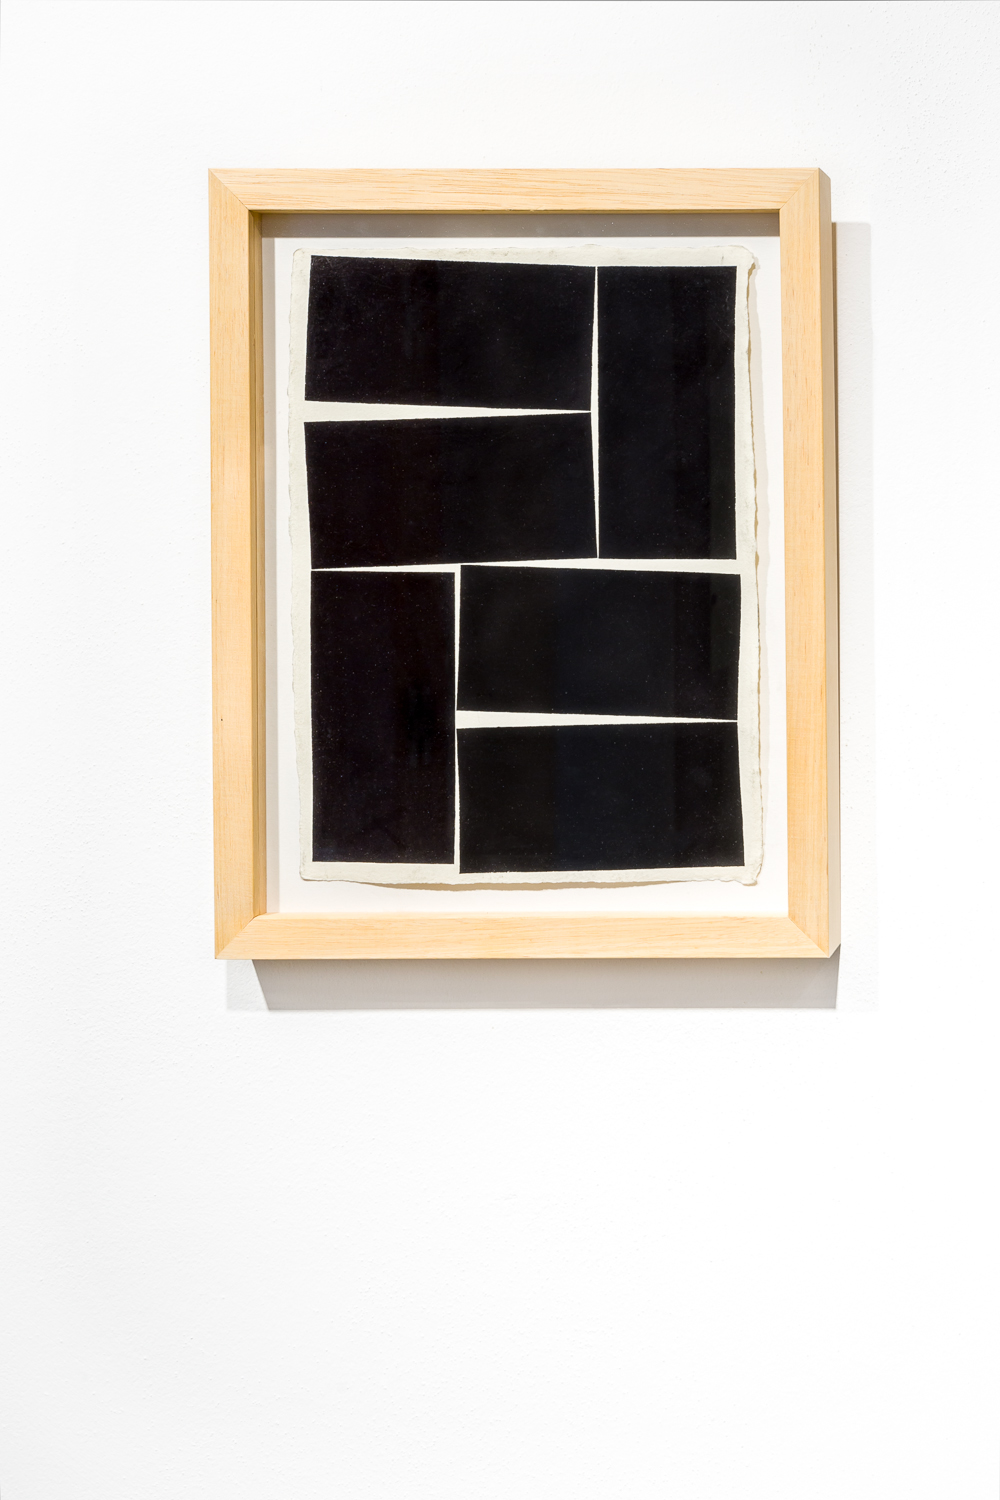 Installation view by Akira Arita, Untitled, 37 x 30 cm, gouache on paper, 2013